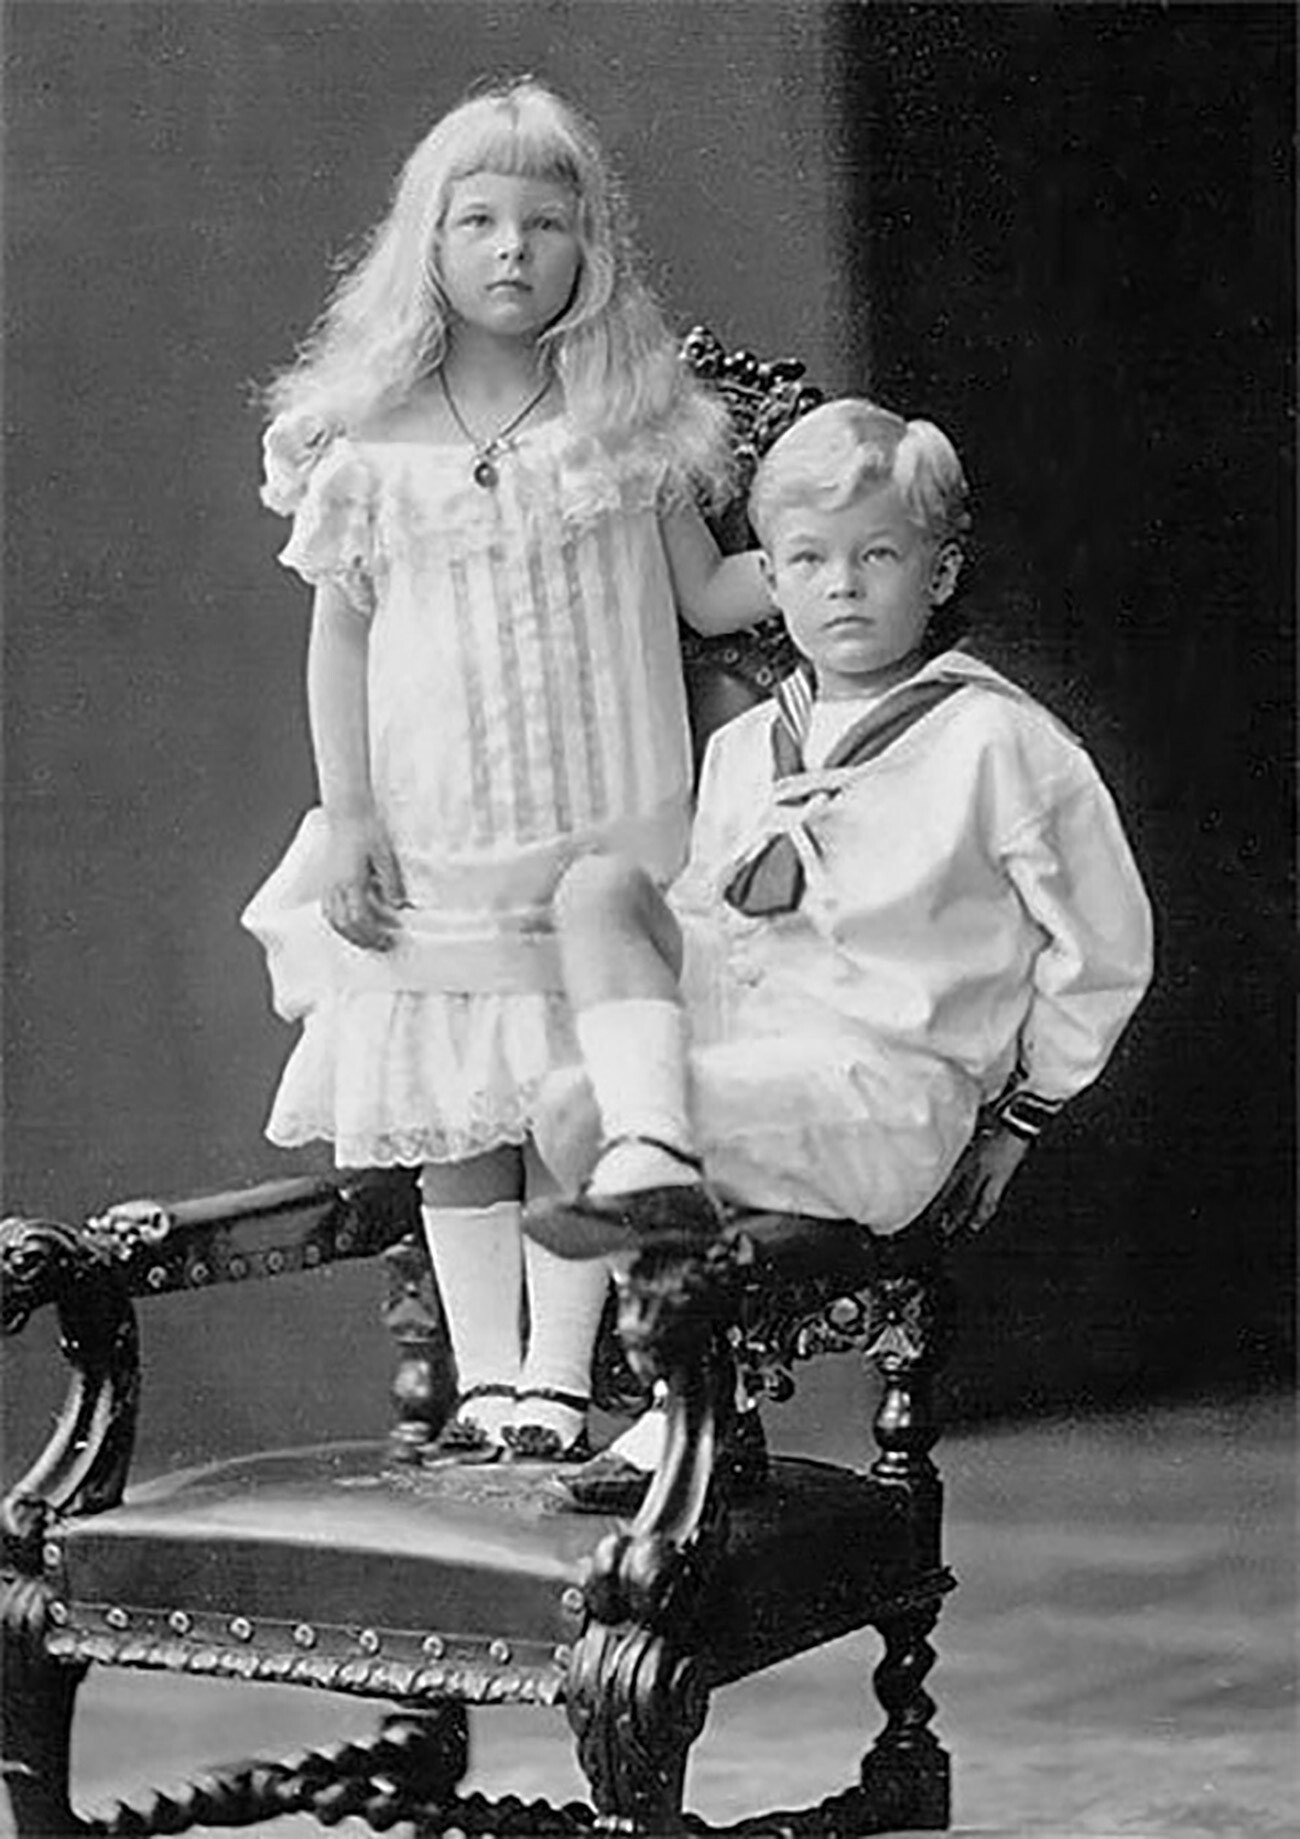 Georg-Michael Alexander von Merenberg with his sister. Circa 1900.